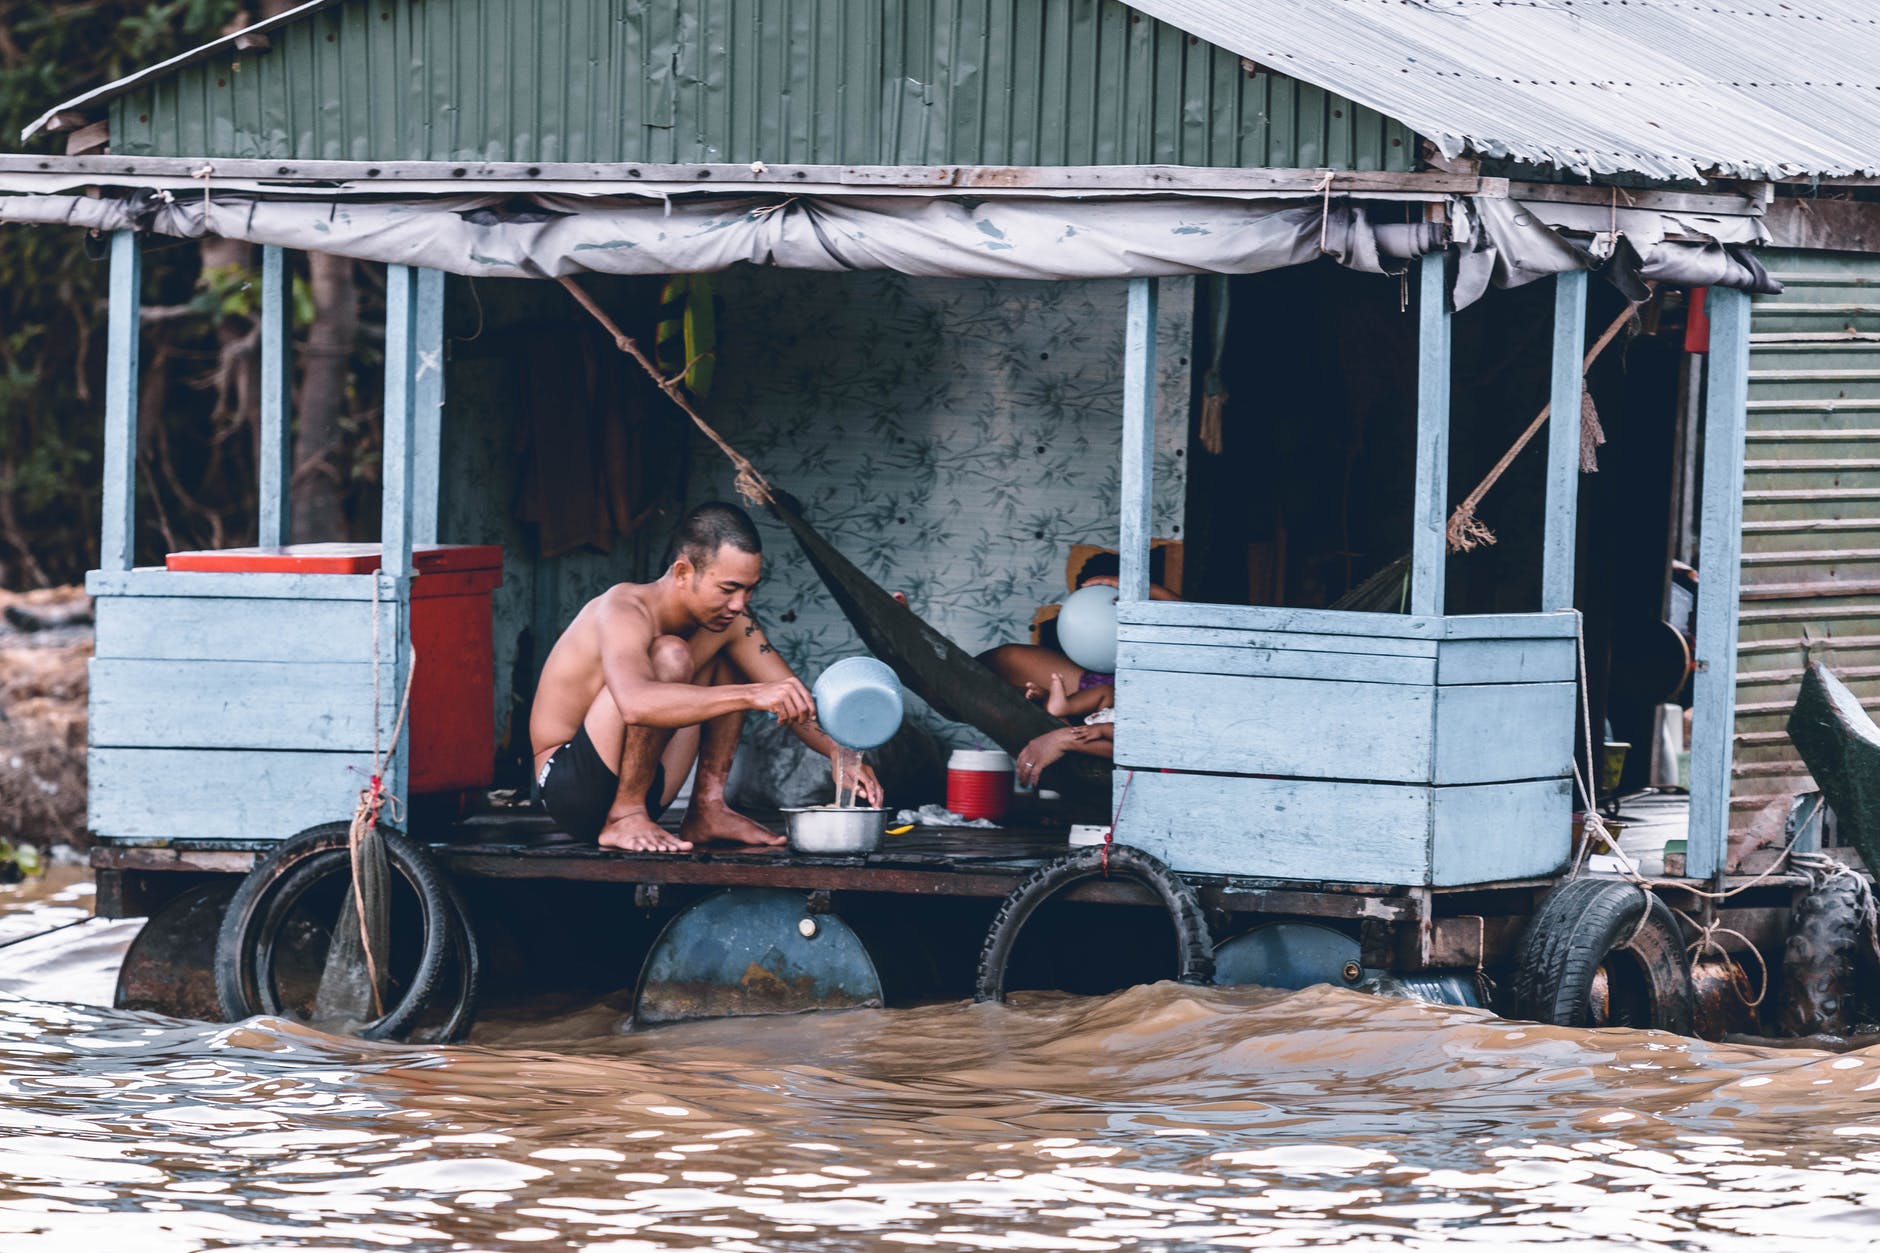 Man after surviving a major flood event